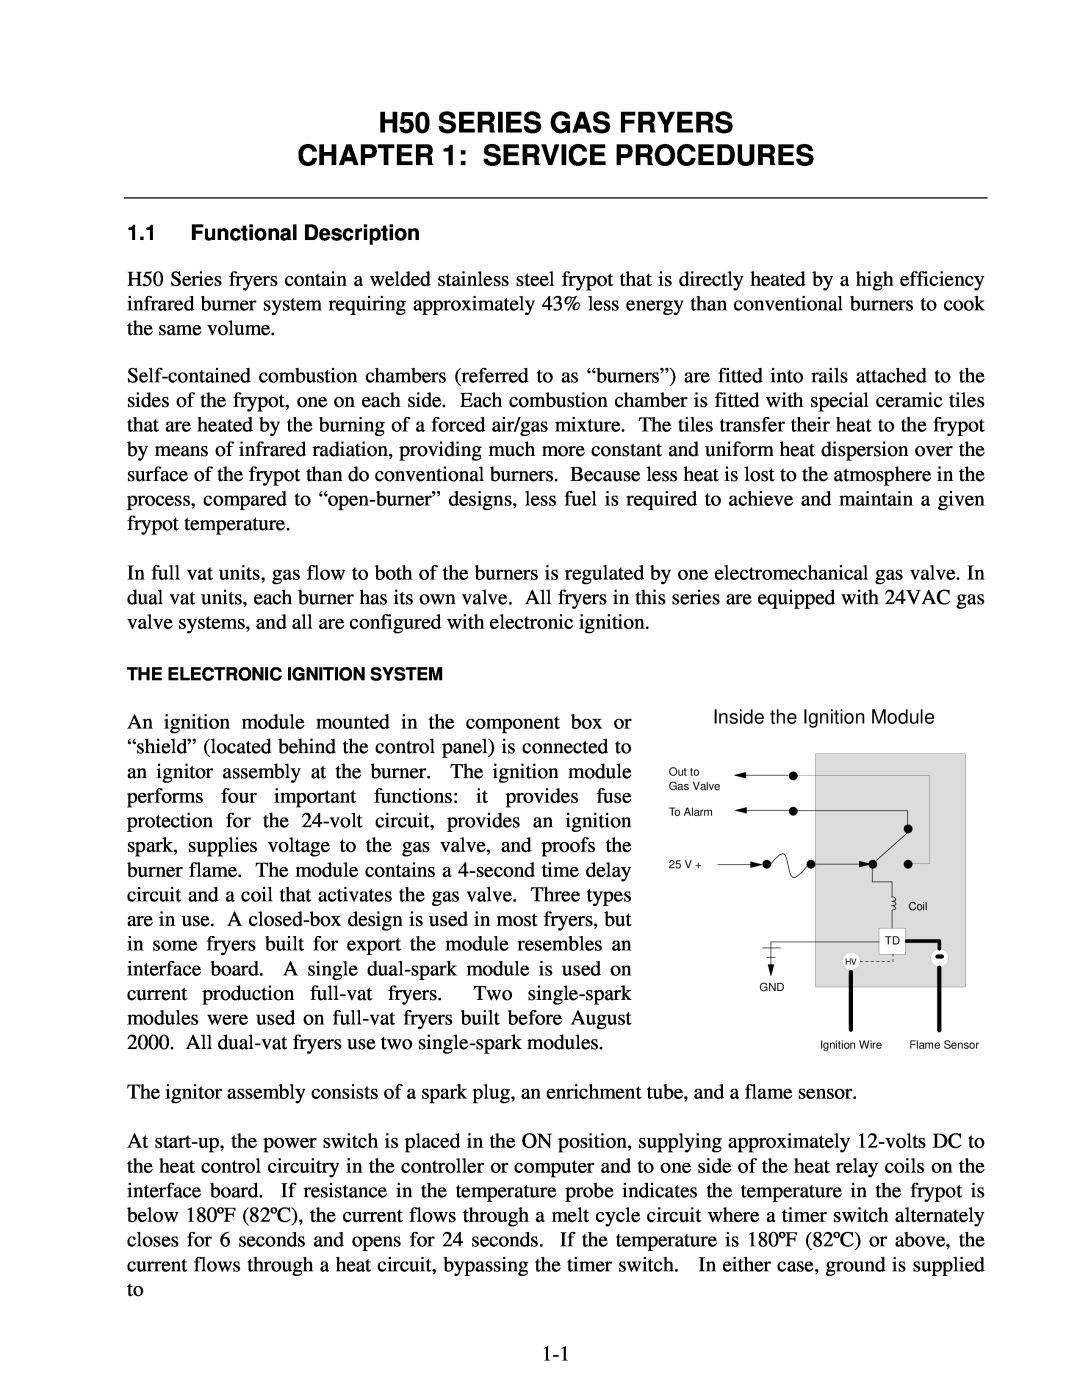 Frymaster H50 Series manual H50 SERIES GAS FRYERS, Service Procedures, 1.1Functional Description 